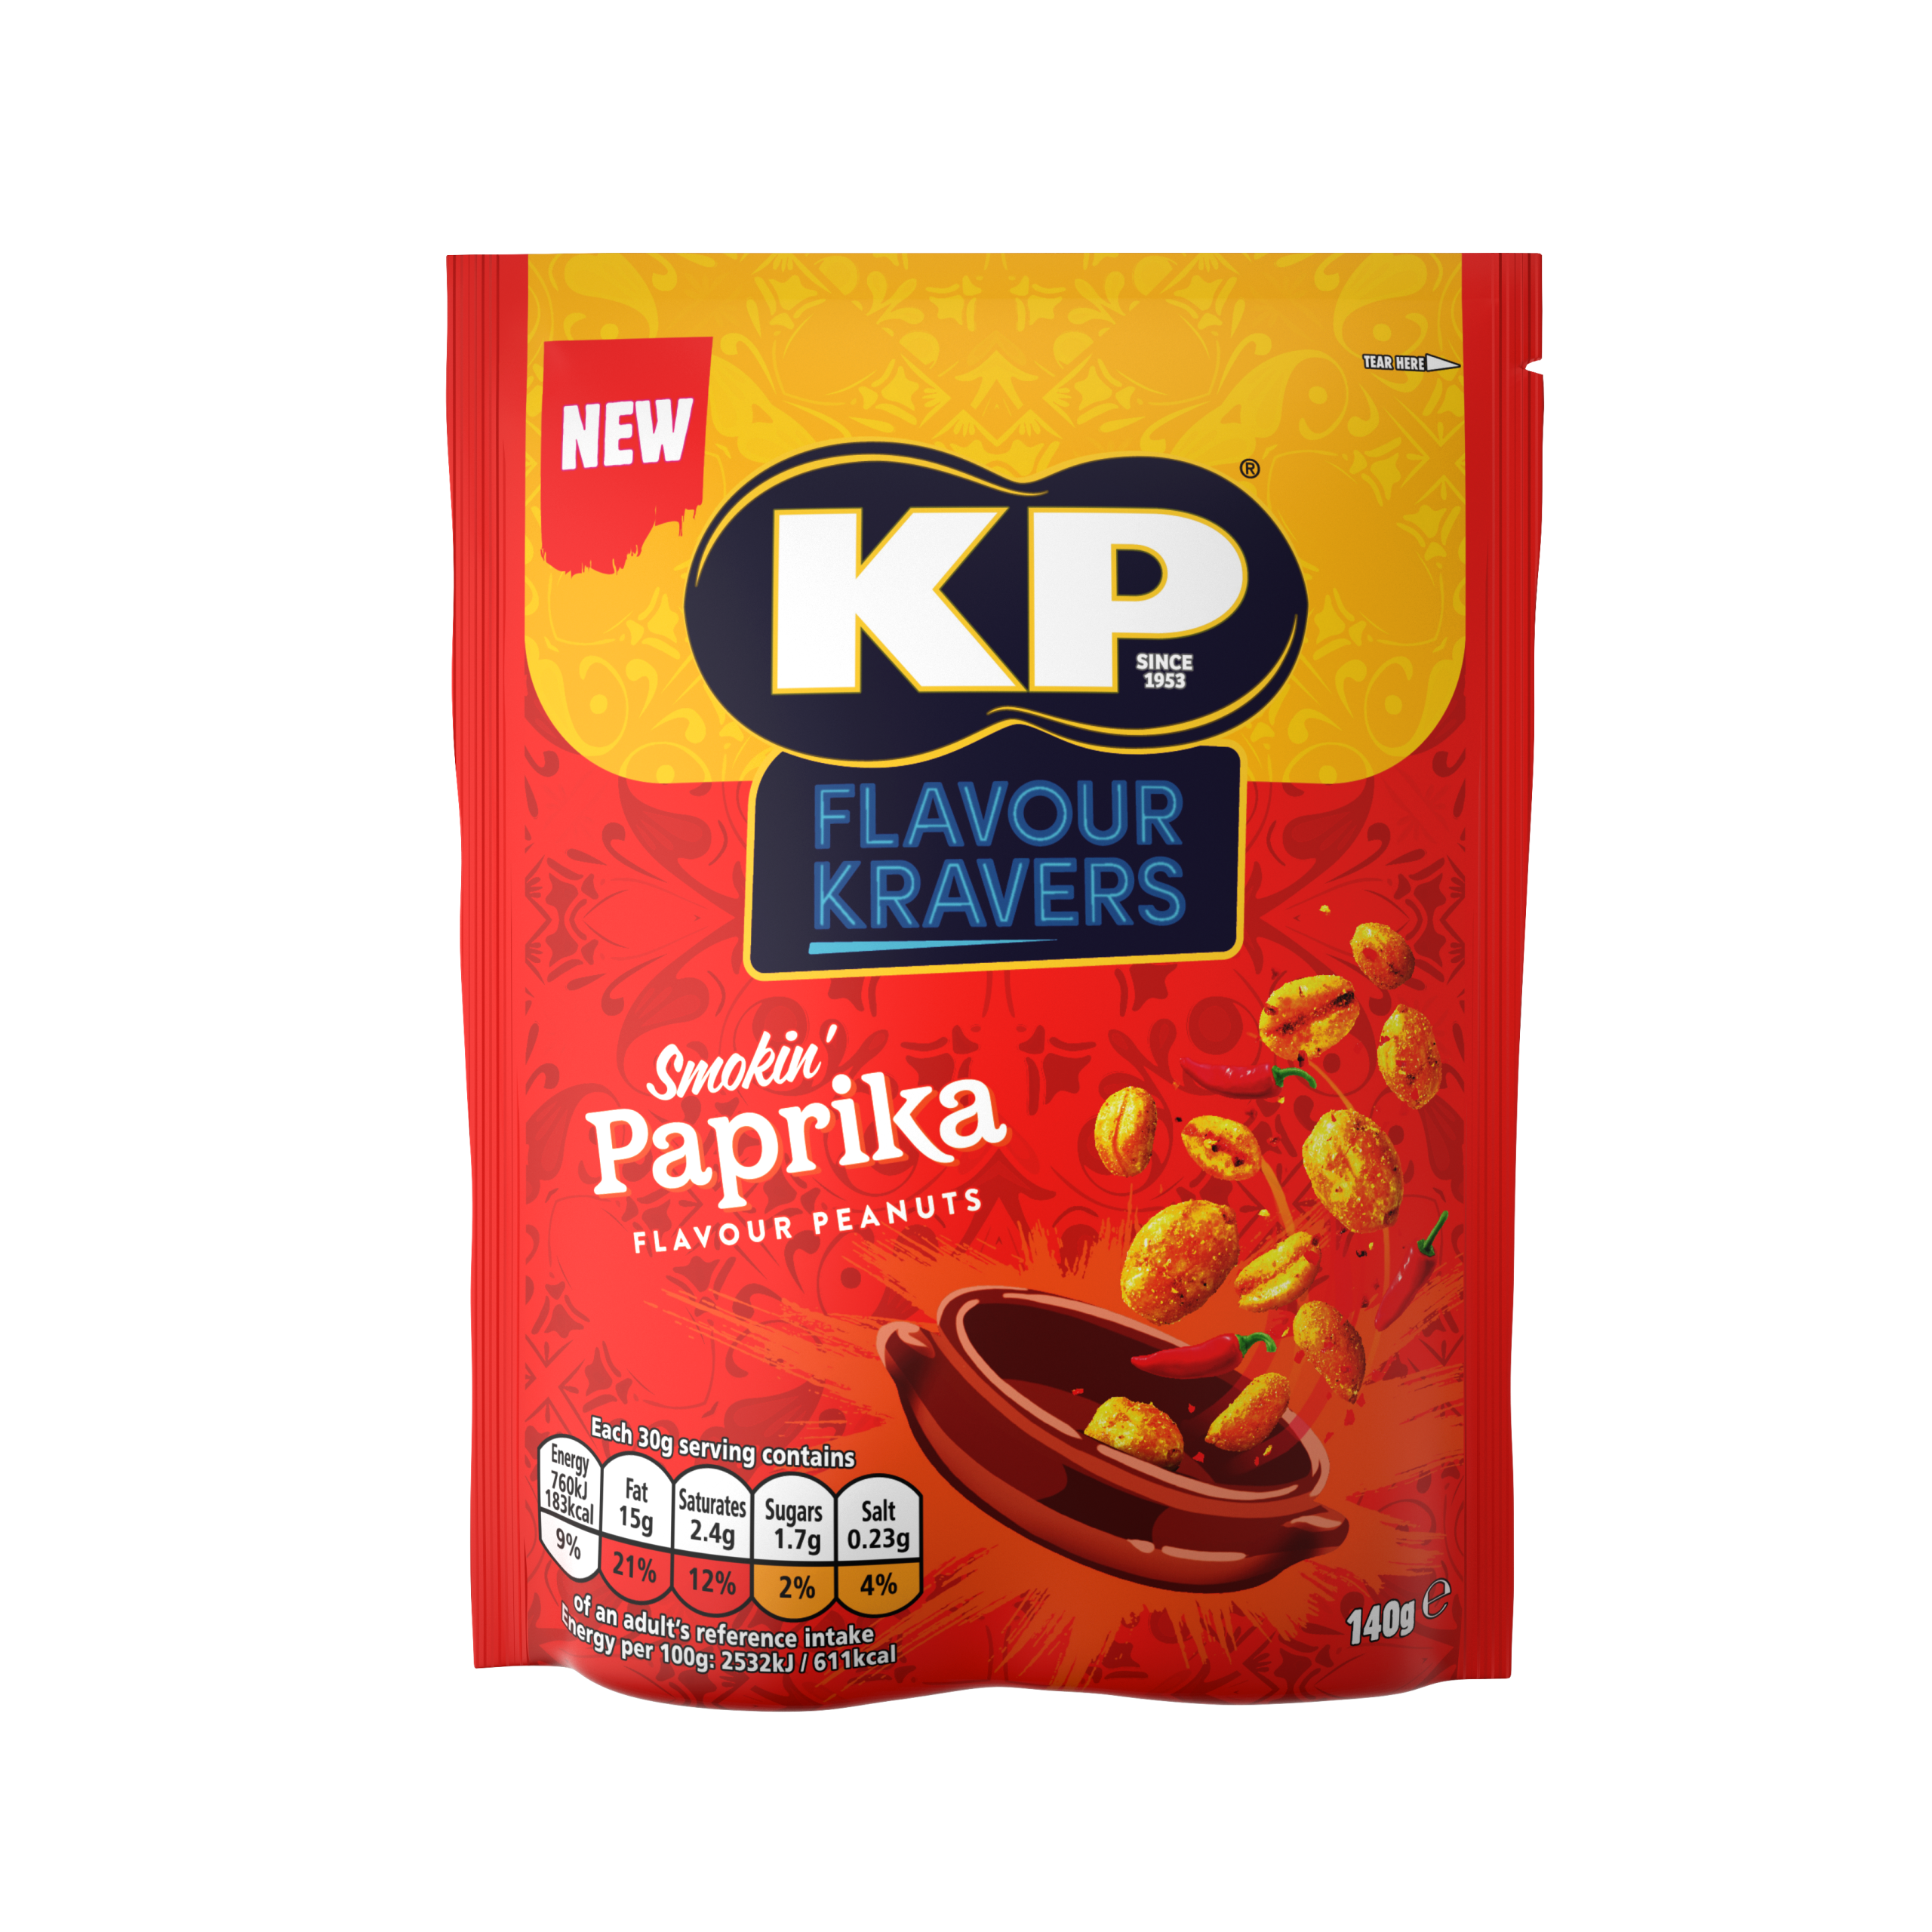 KP Snacks launches brand new ‘KP Flavour Kravers’ range